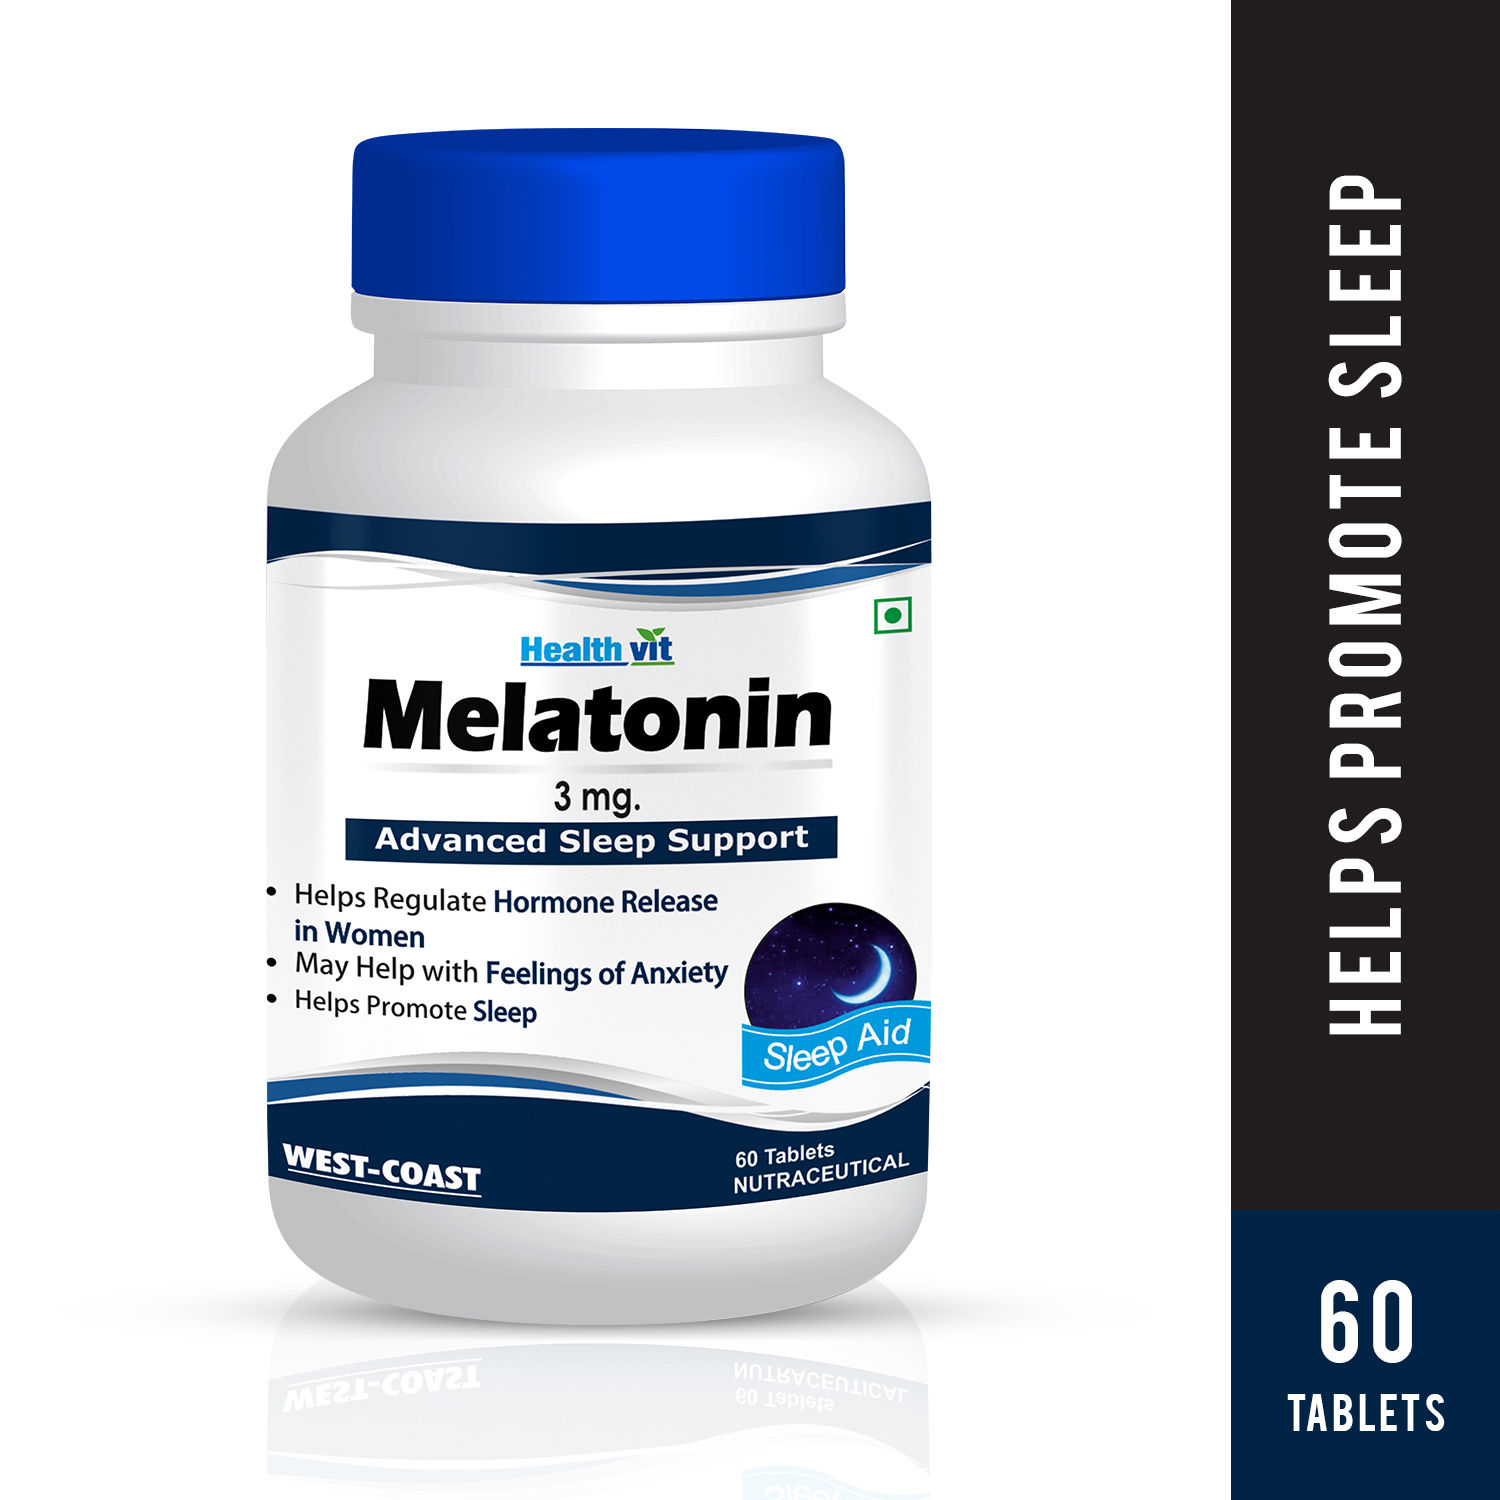 HealthVit Melatonin 3mg 60 Tablets